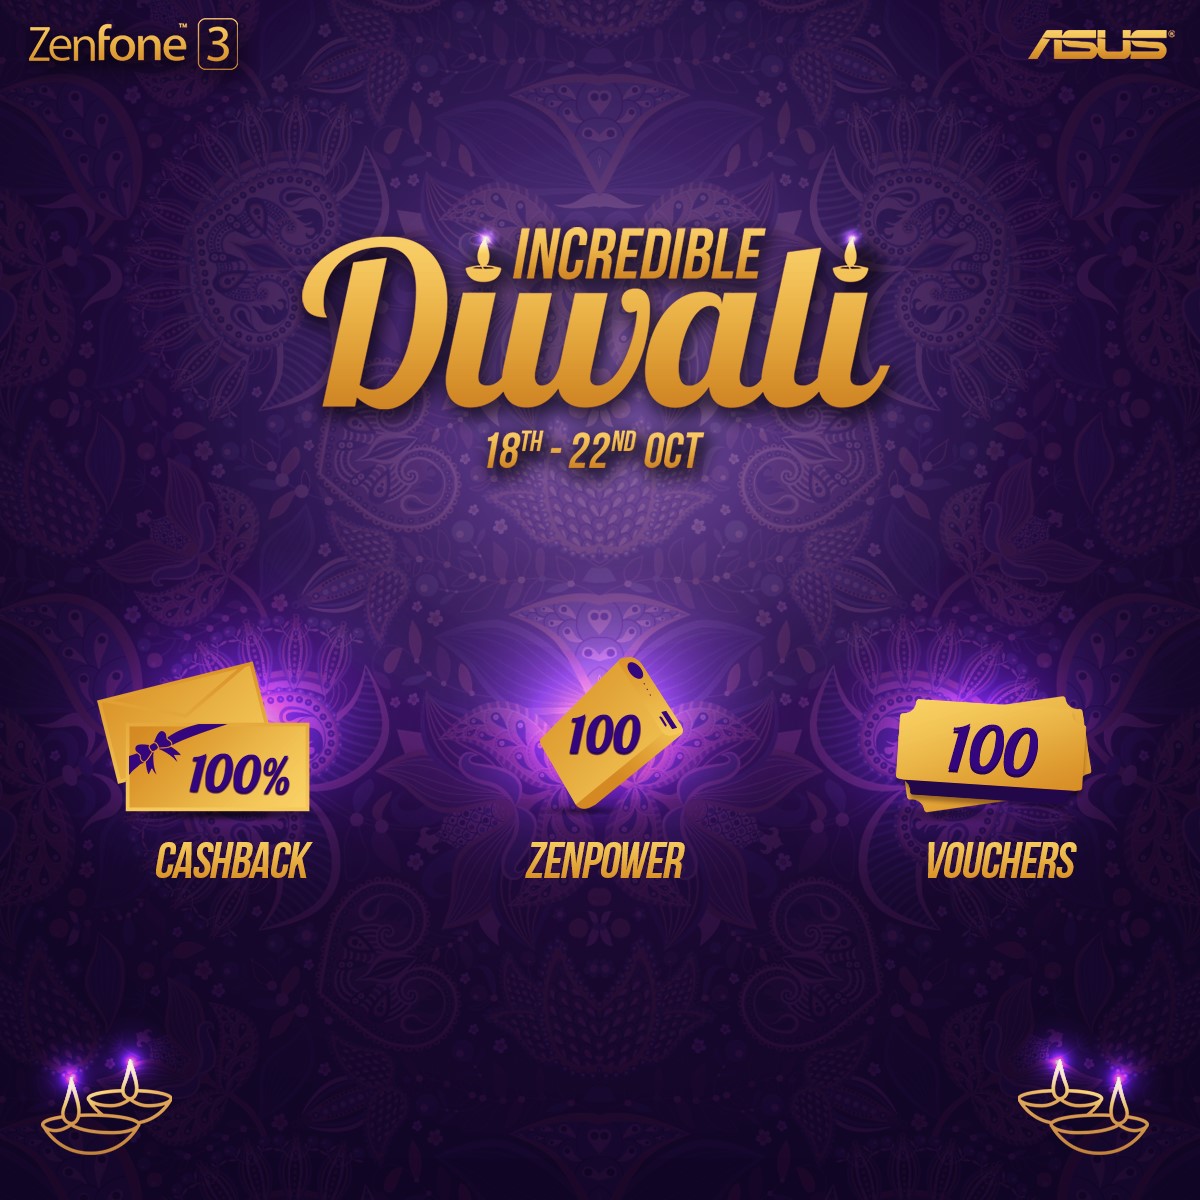 ASUS announces ‘Incredible Diwali’ offer to celebrate Diwali